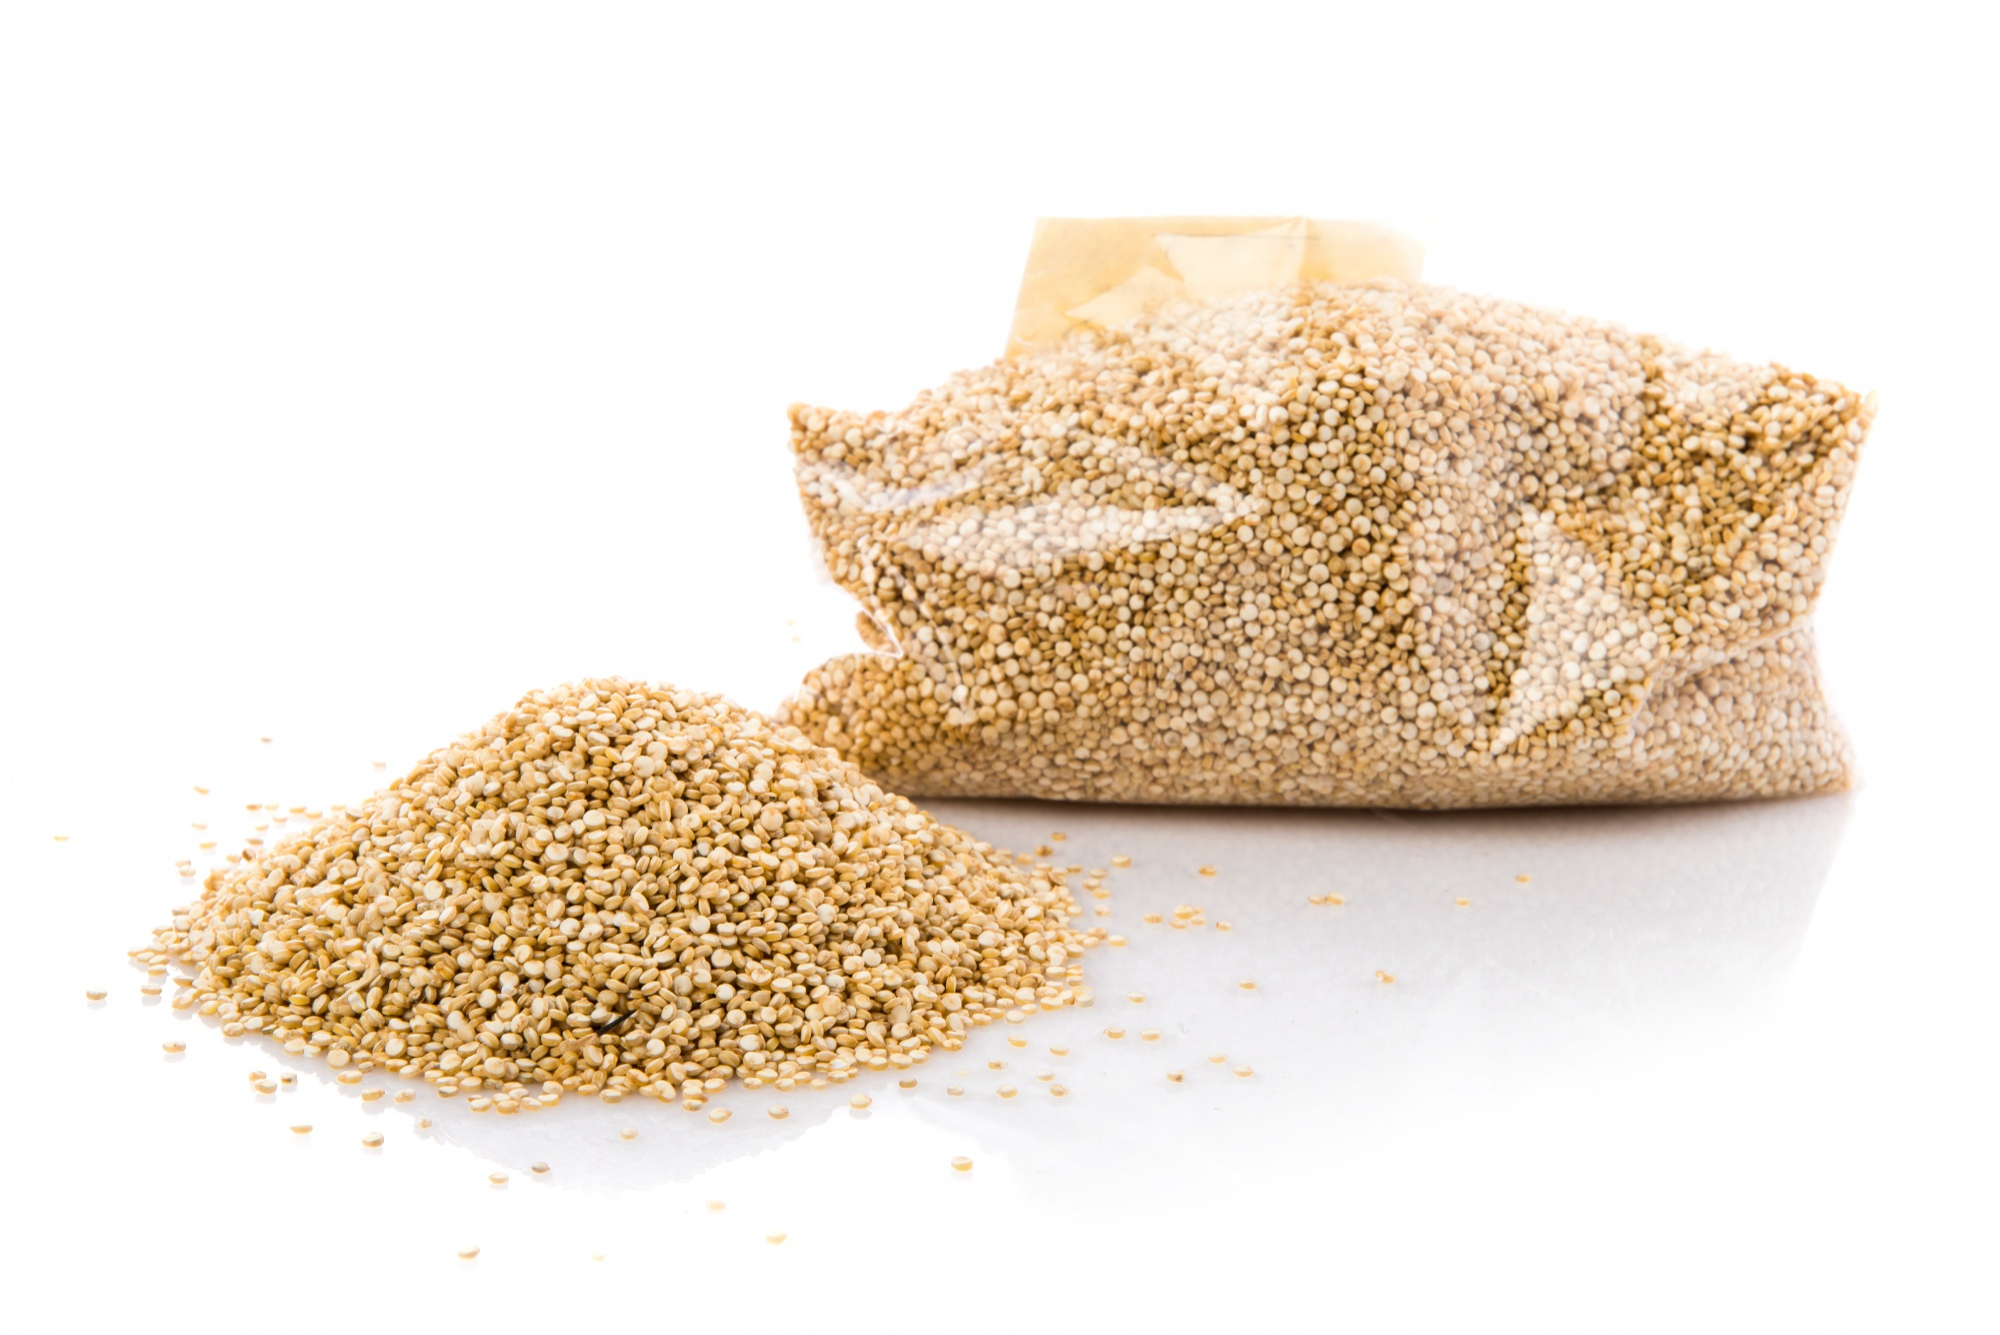 Quinoa contains health promoting nutrients